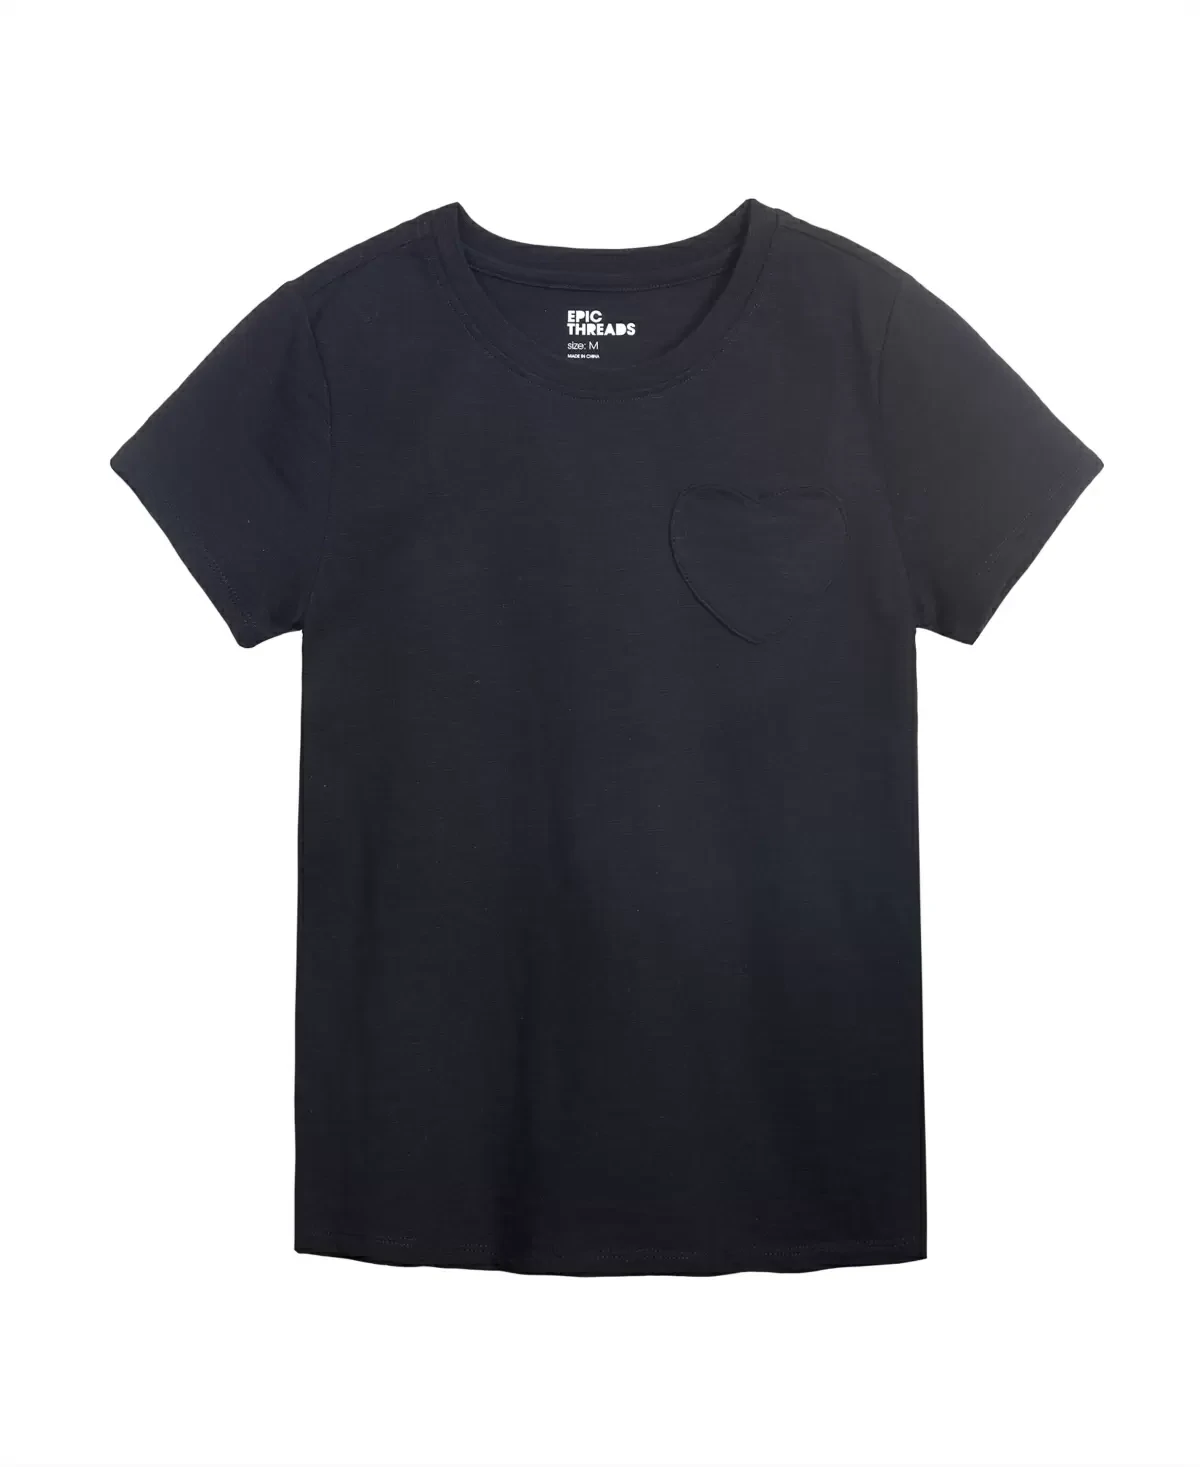 Epic Threads Big Girls Short Sleeve Heart Pocket T-shirt, Black - Size Medium